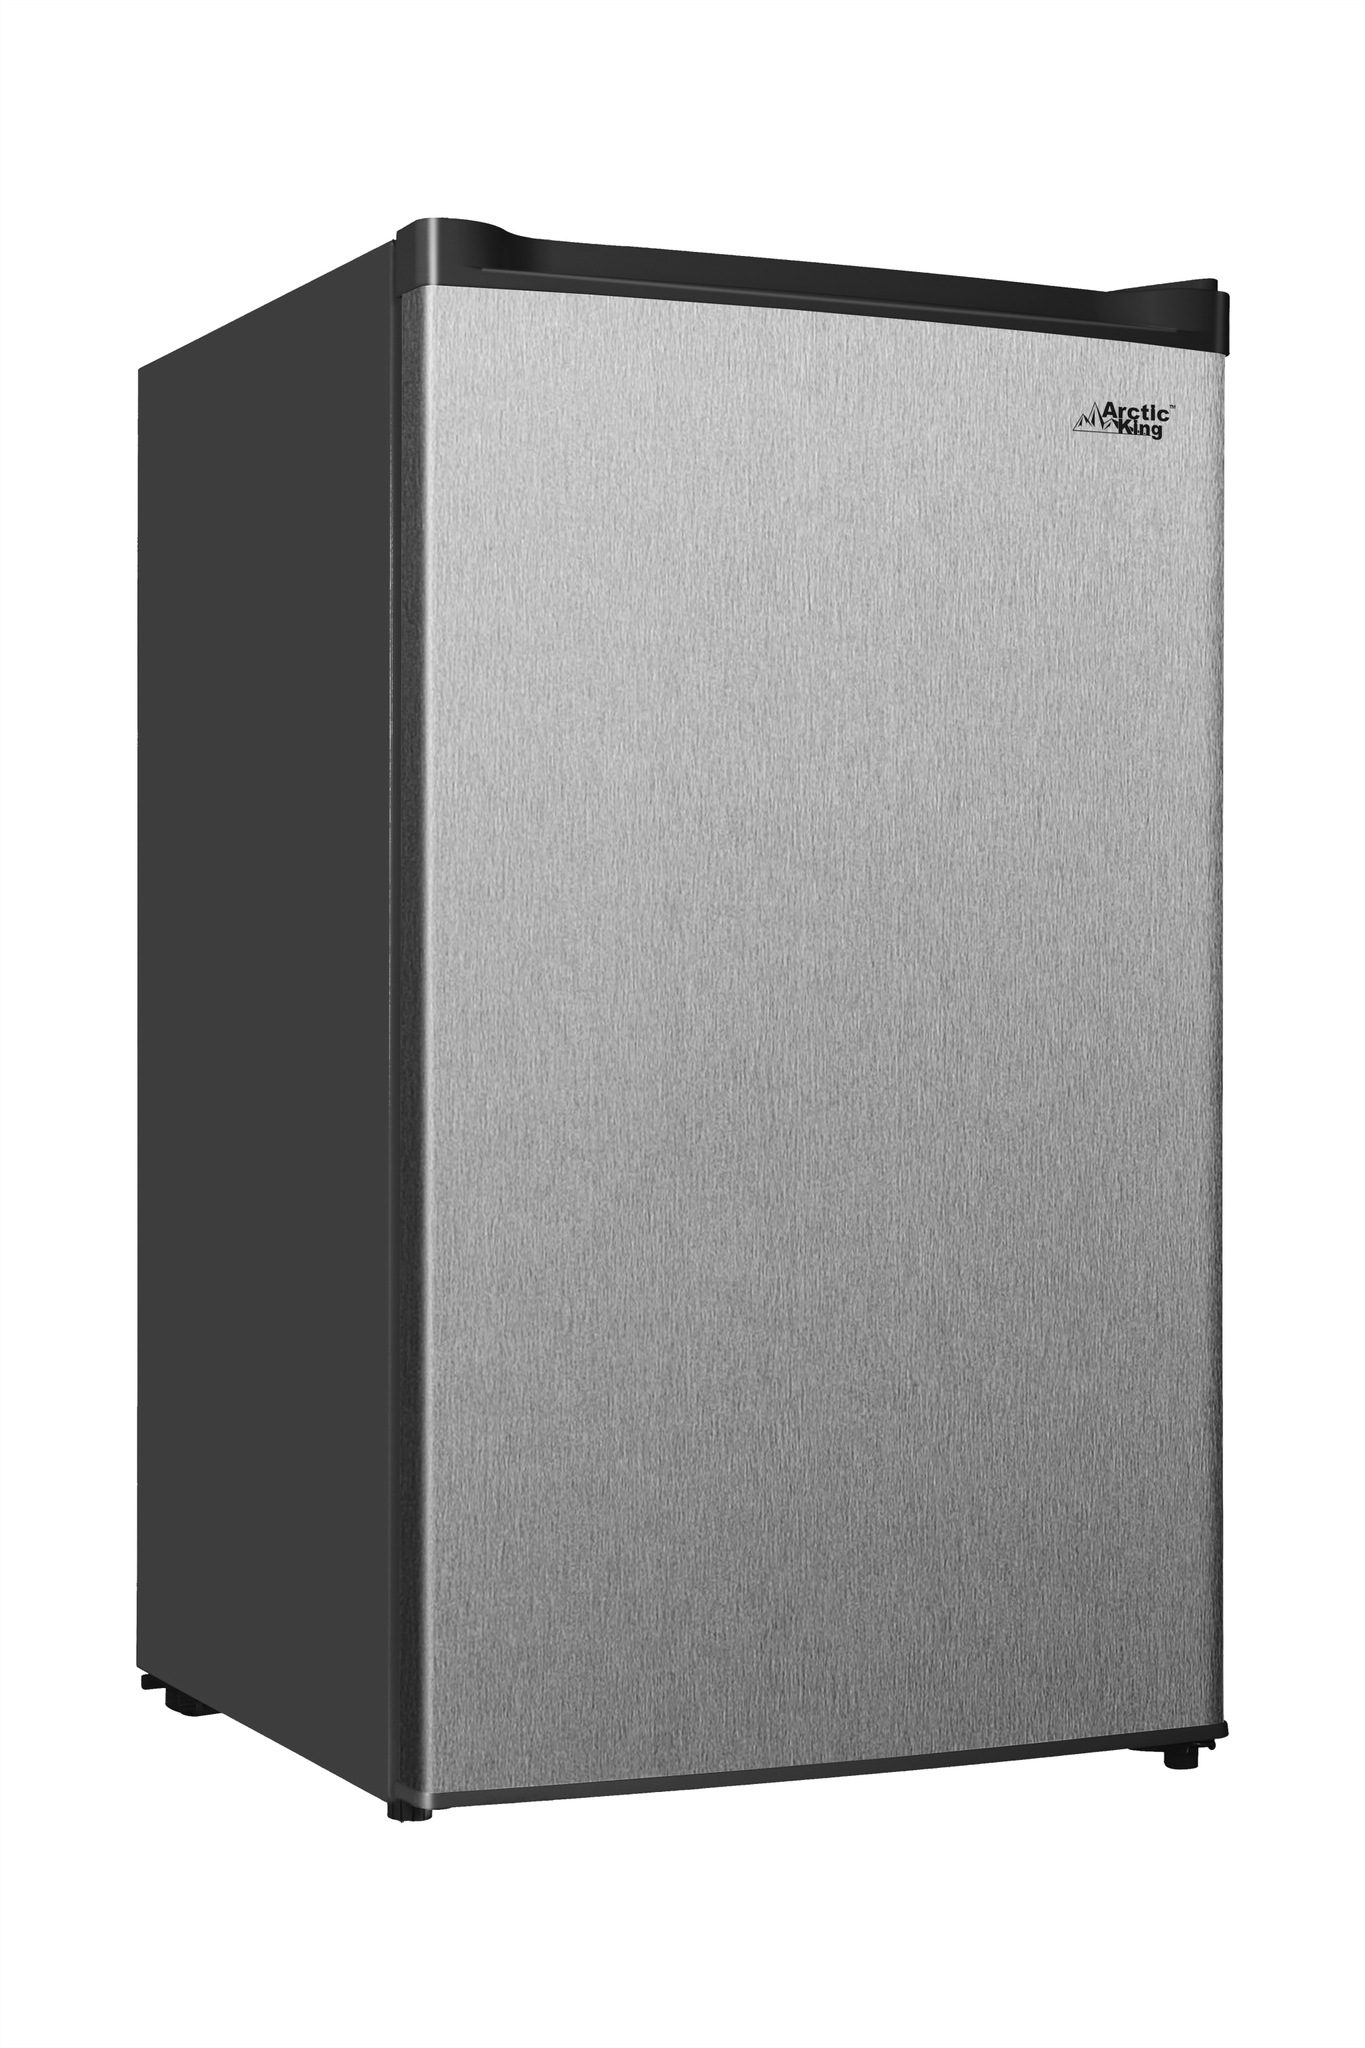 Arctic King 3.0 Cu ft Upright Freezer Stainless Steel Door, E-star - image 5 of 11